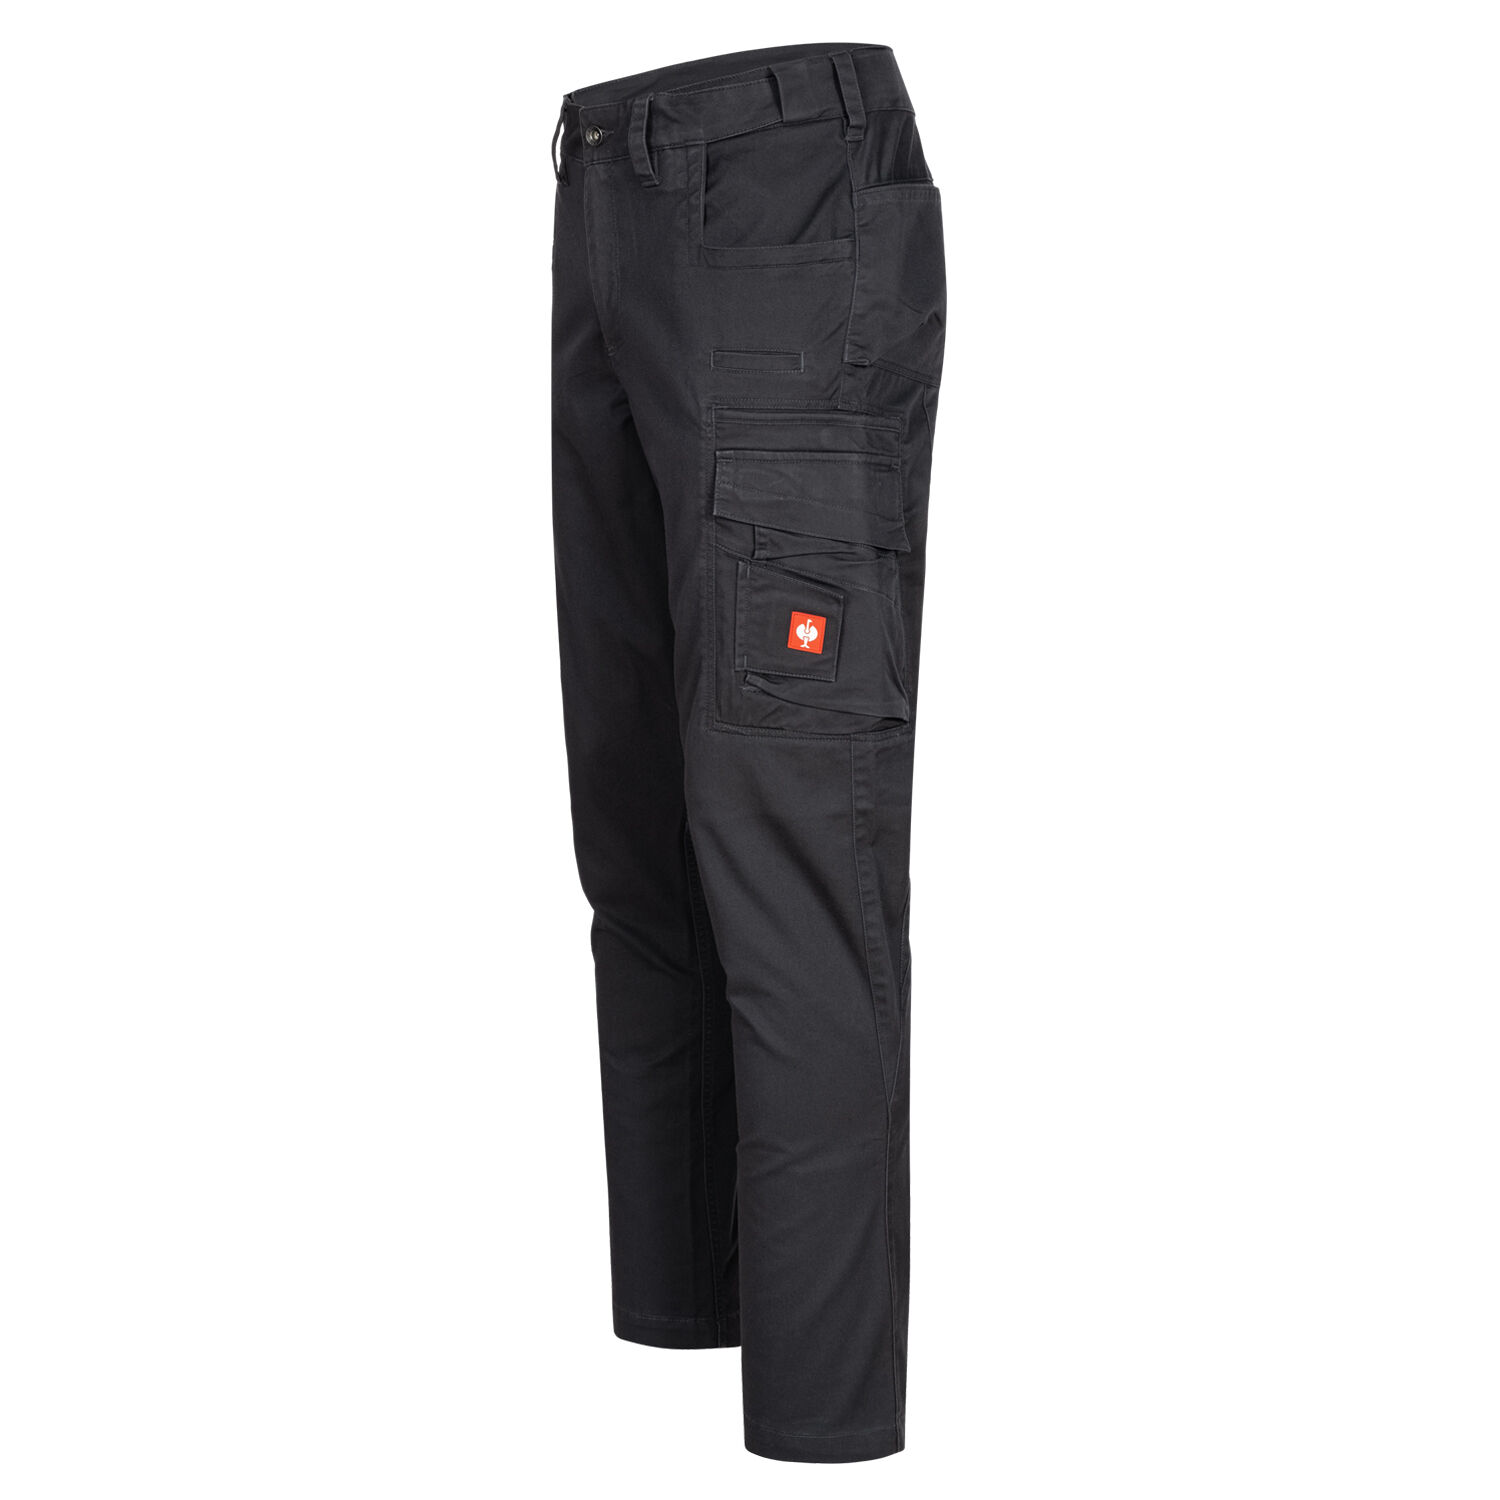 Bild 3: Workwear Pants Long Anthracite